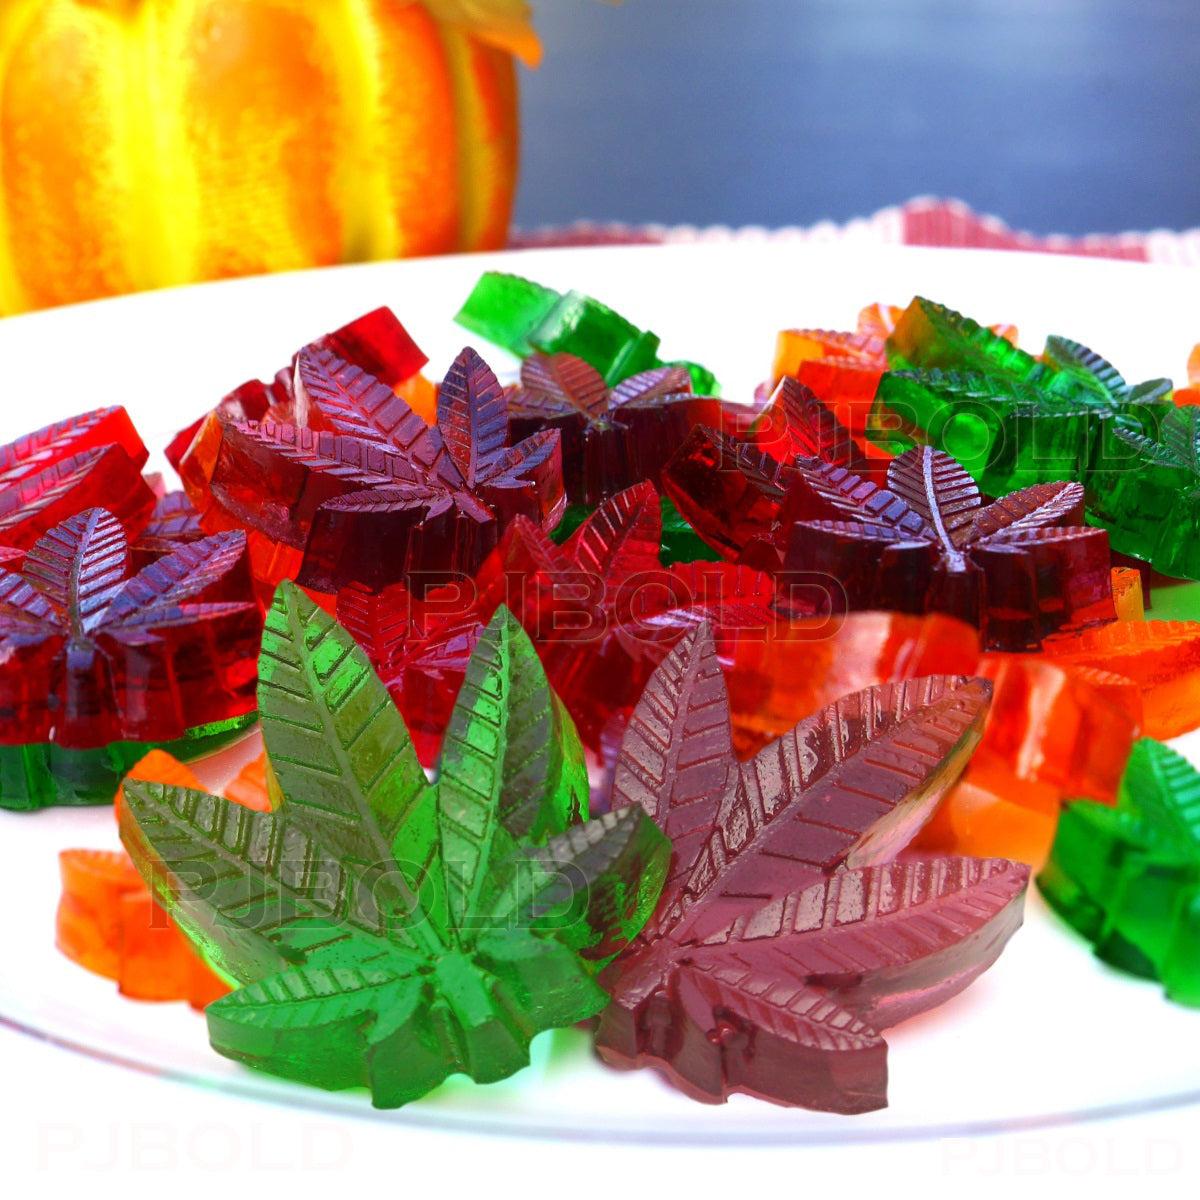 Marijuana Cannabis Hemp Leaf 3 Pack Silicone Molds Candy Weed Pot Mold Chocolate Gummy